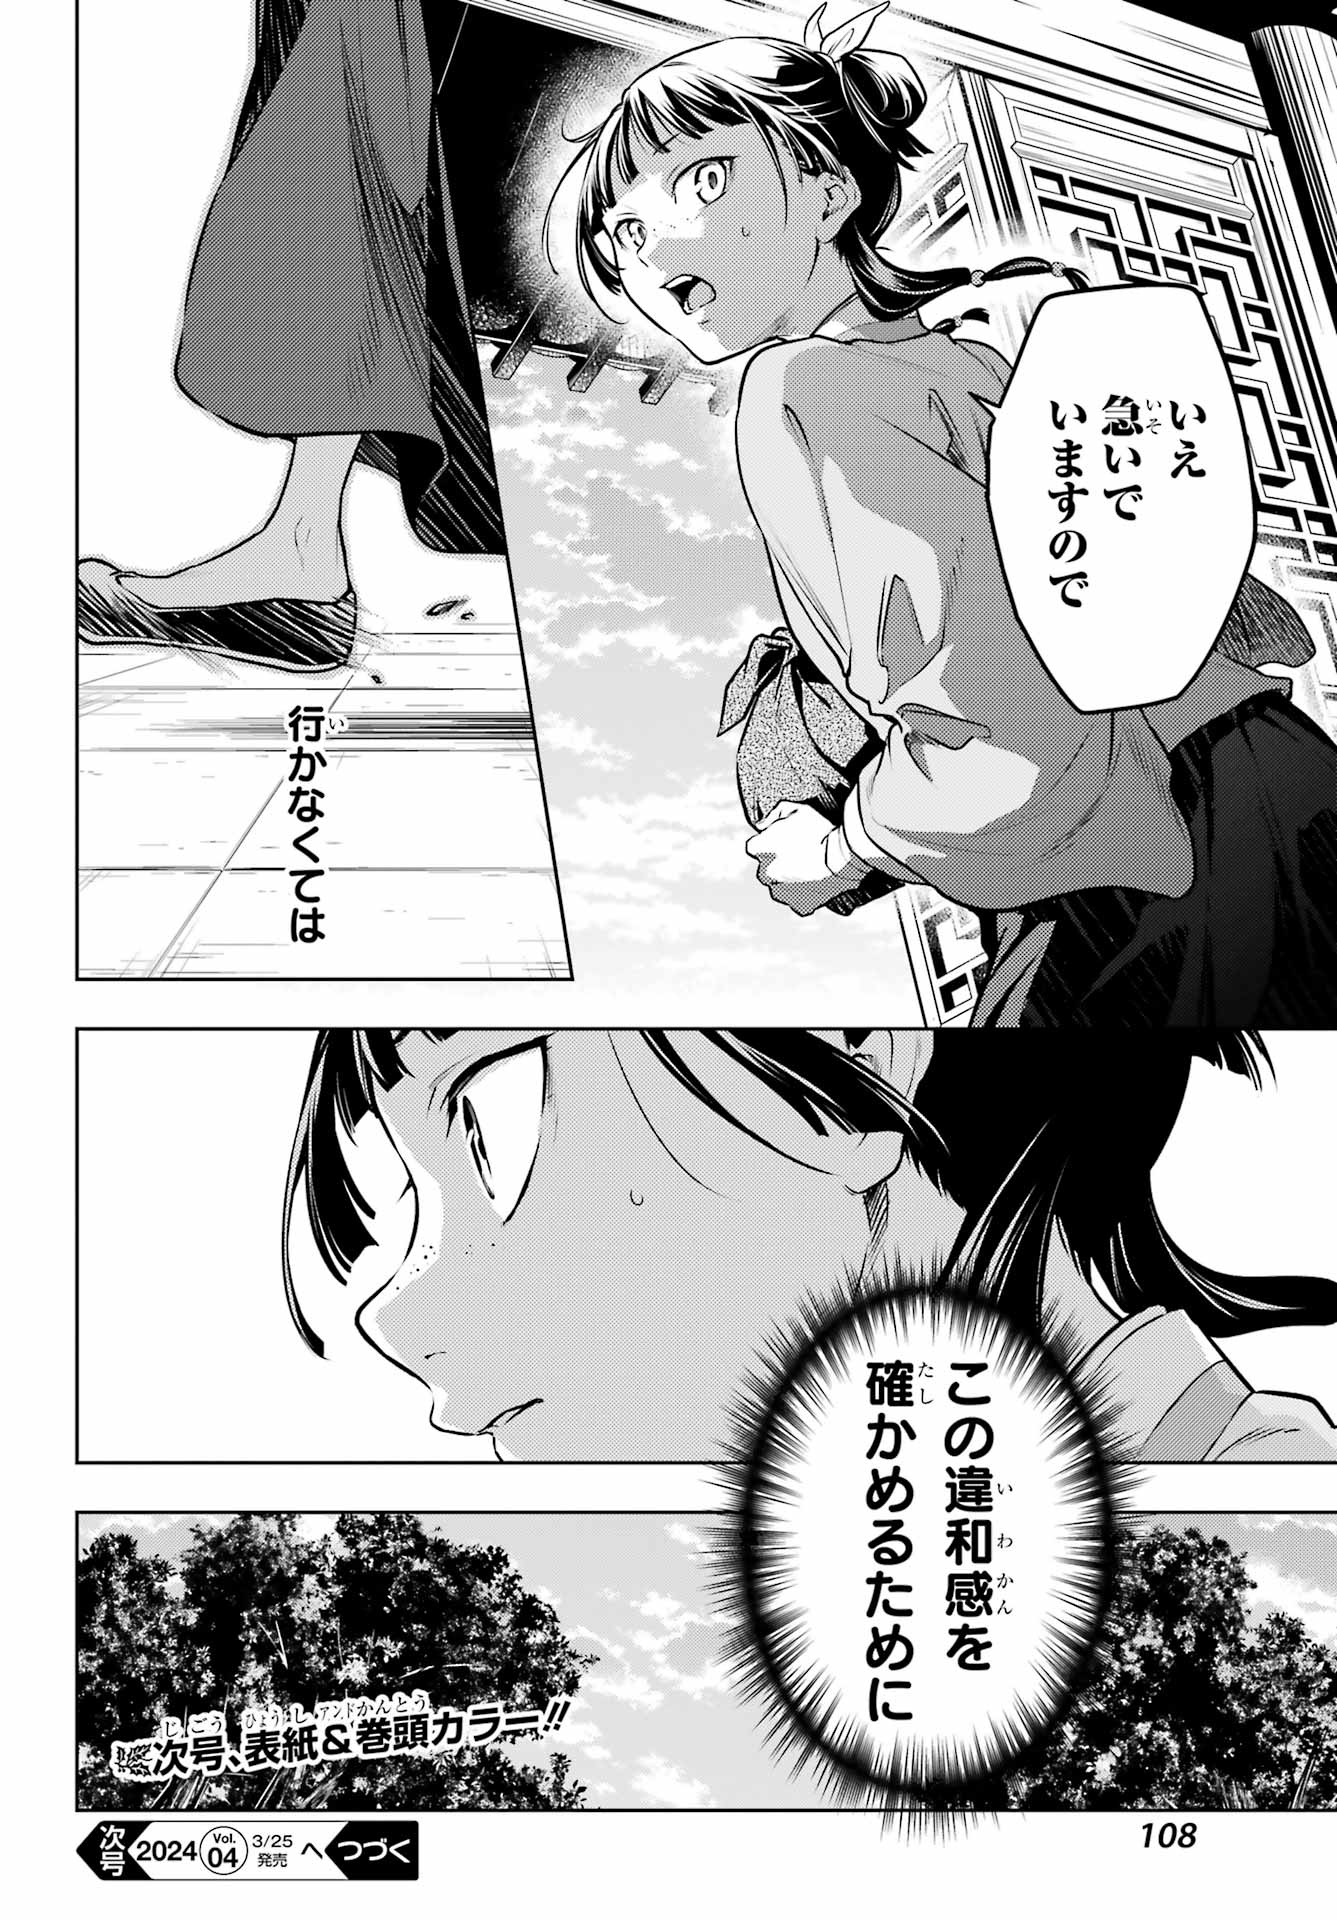 Kusuriya no Hitorigoto - Chapter 70 - Page 20